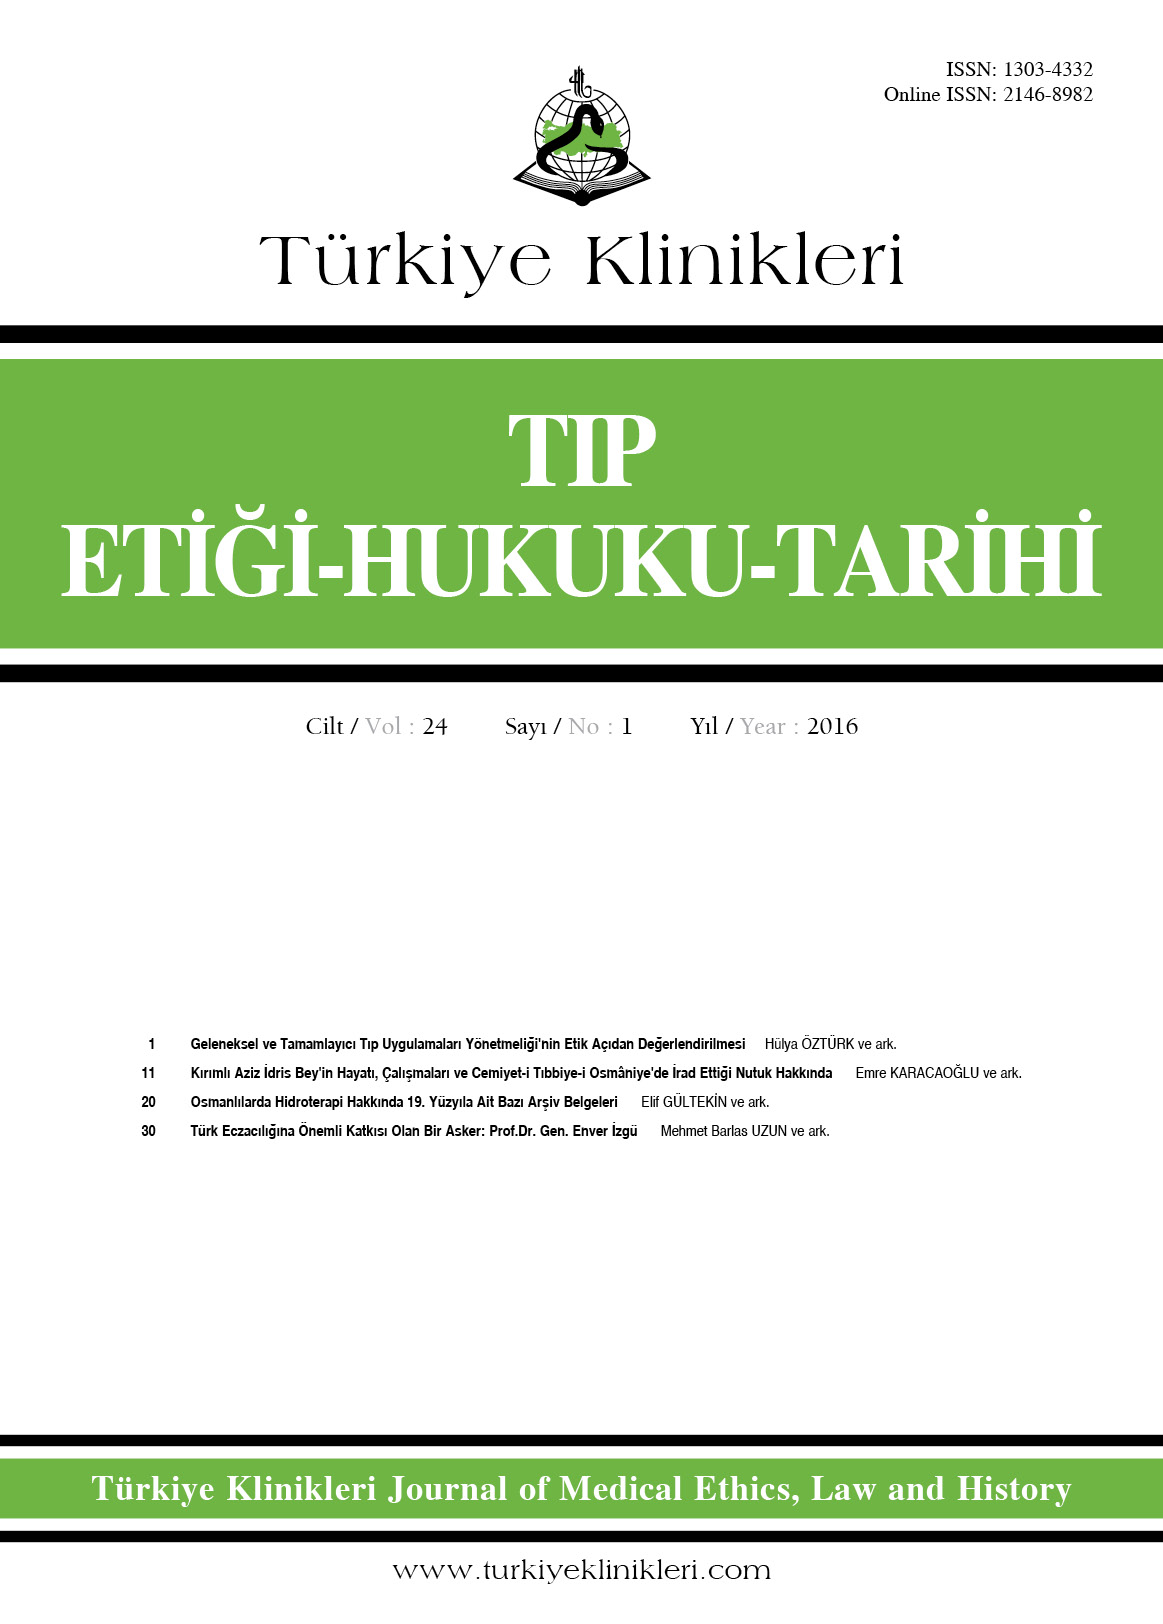 Turkiye Klinikleri Journal of Medical Ethics-Law and History 2016 ...